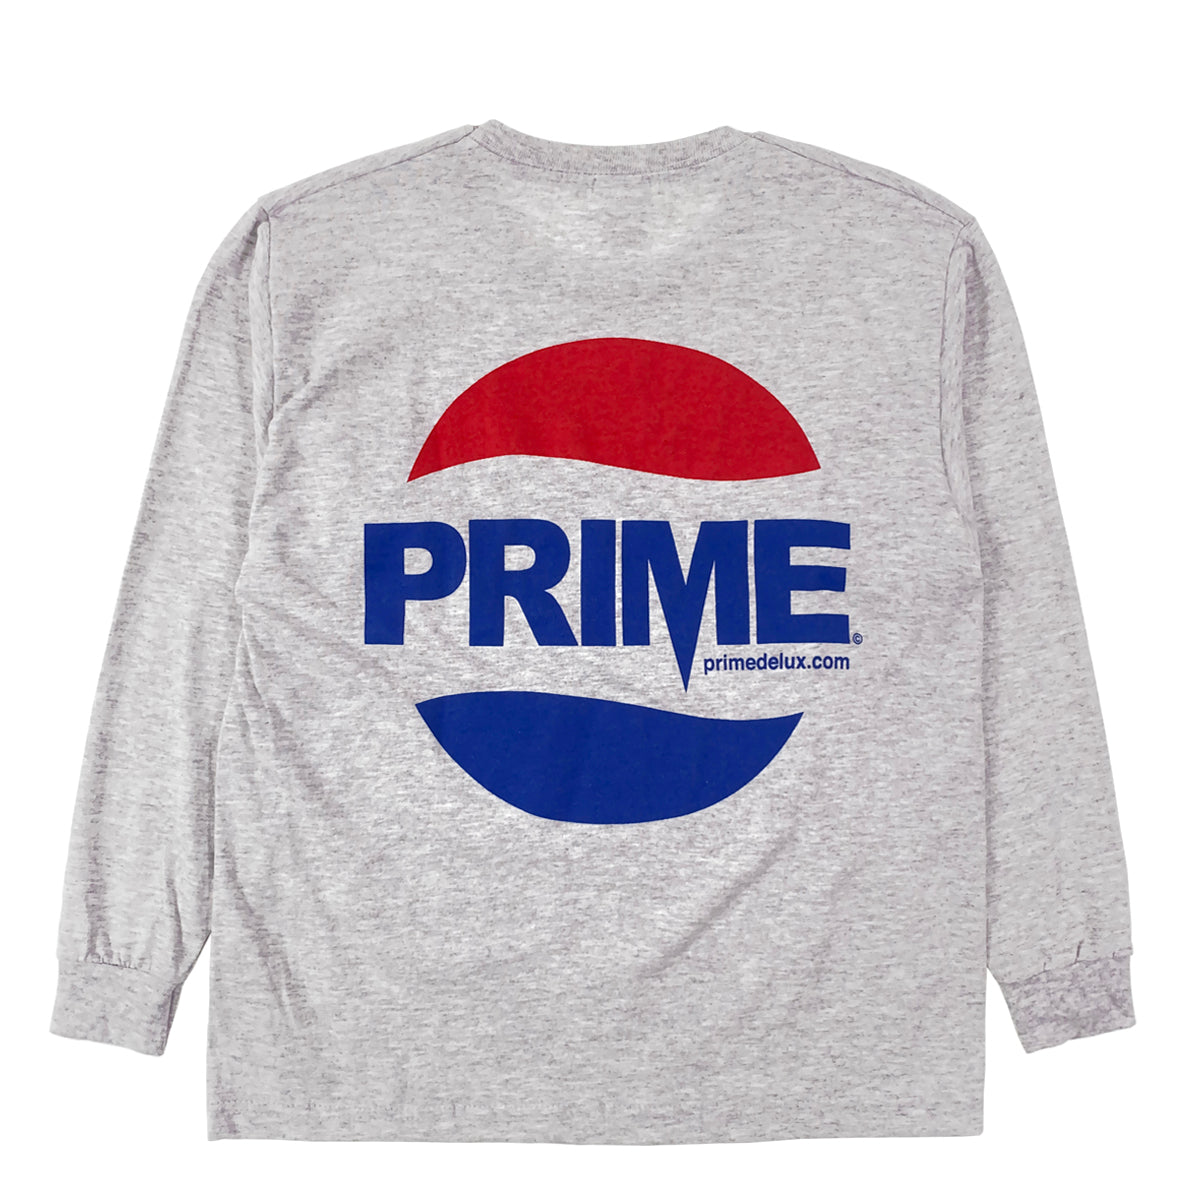 Prime Delux Prepsi Logo Kids Long Sleeve T Shirt - Heather Grey - Prime Delux Store